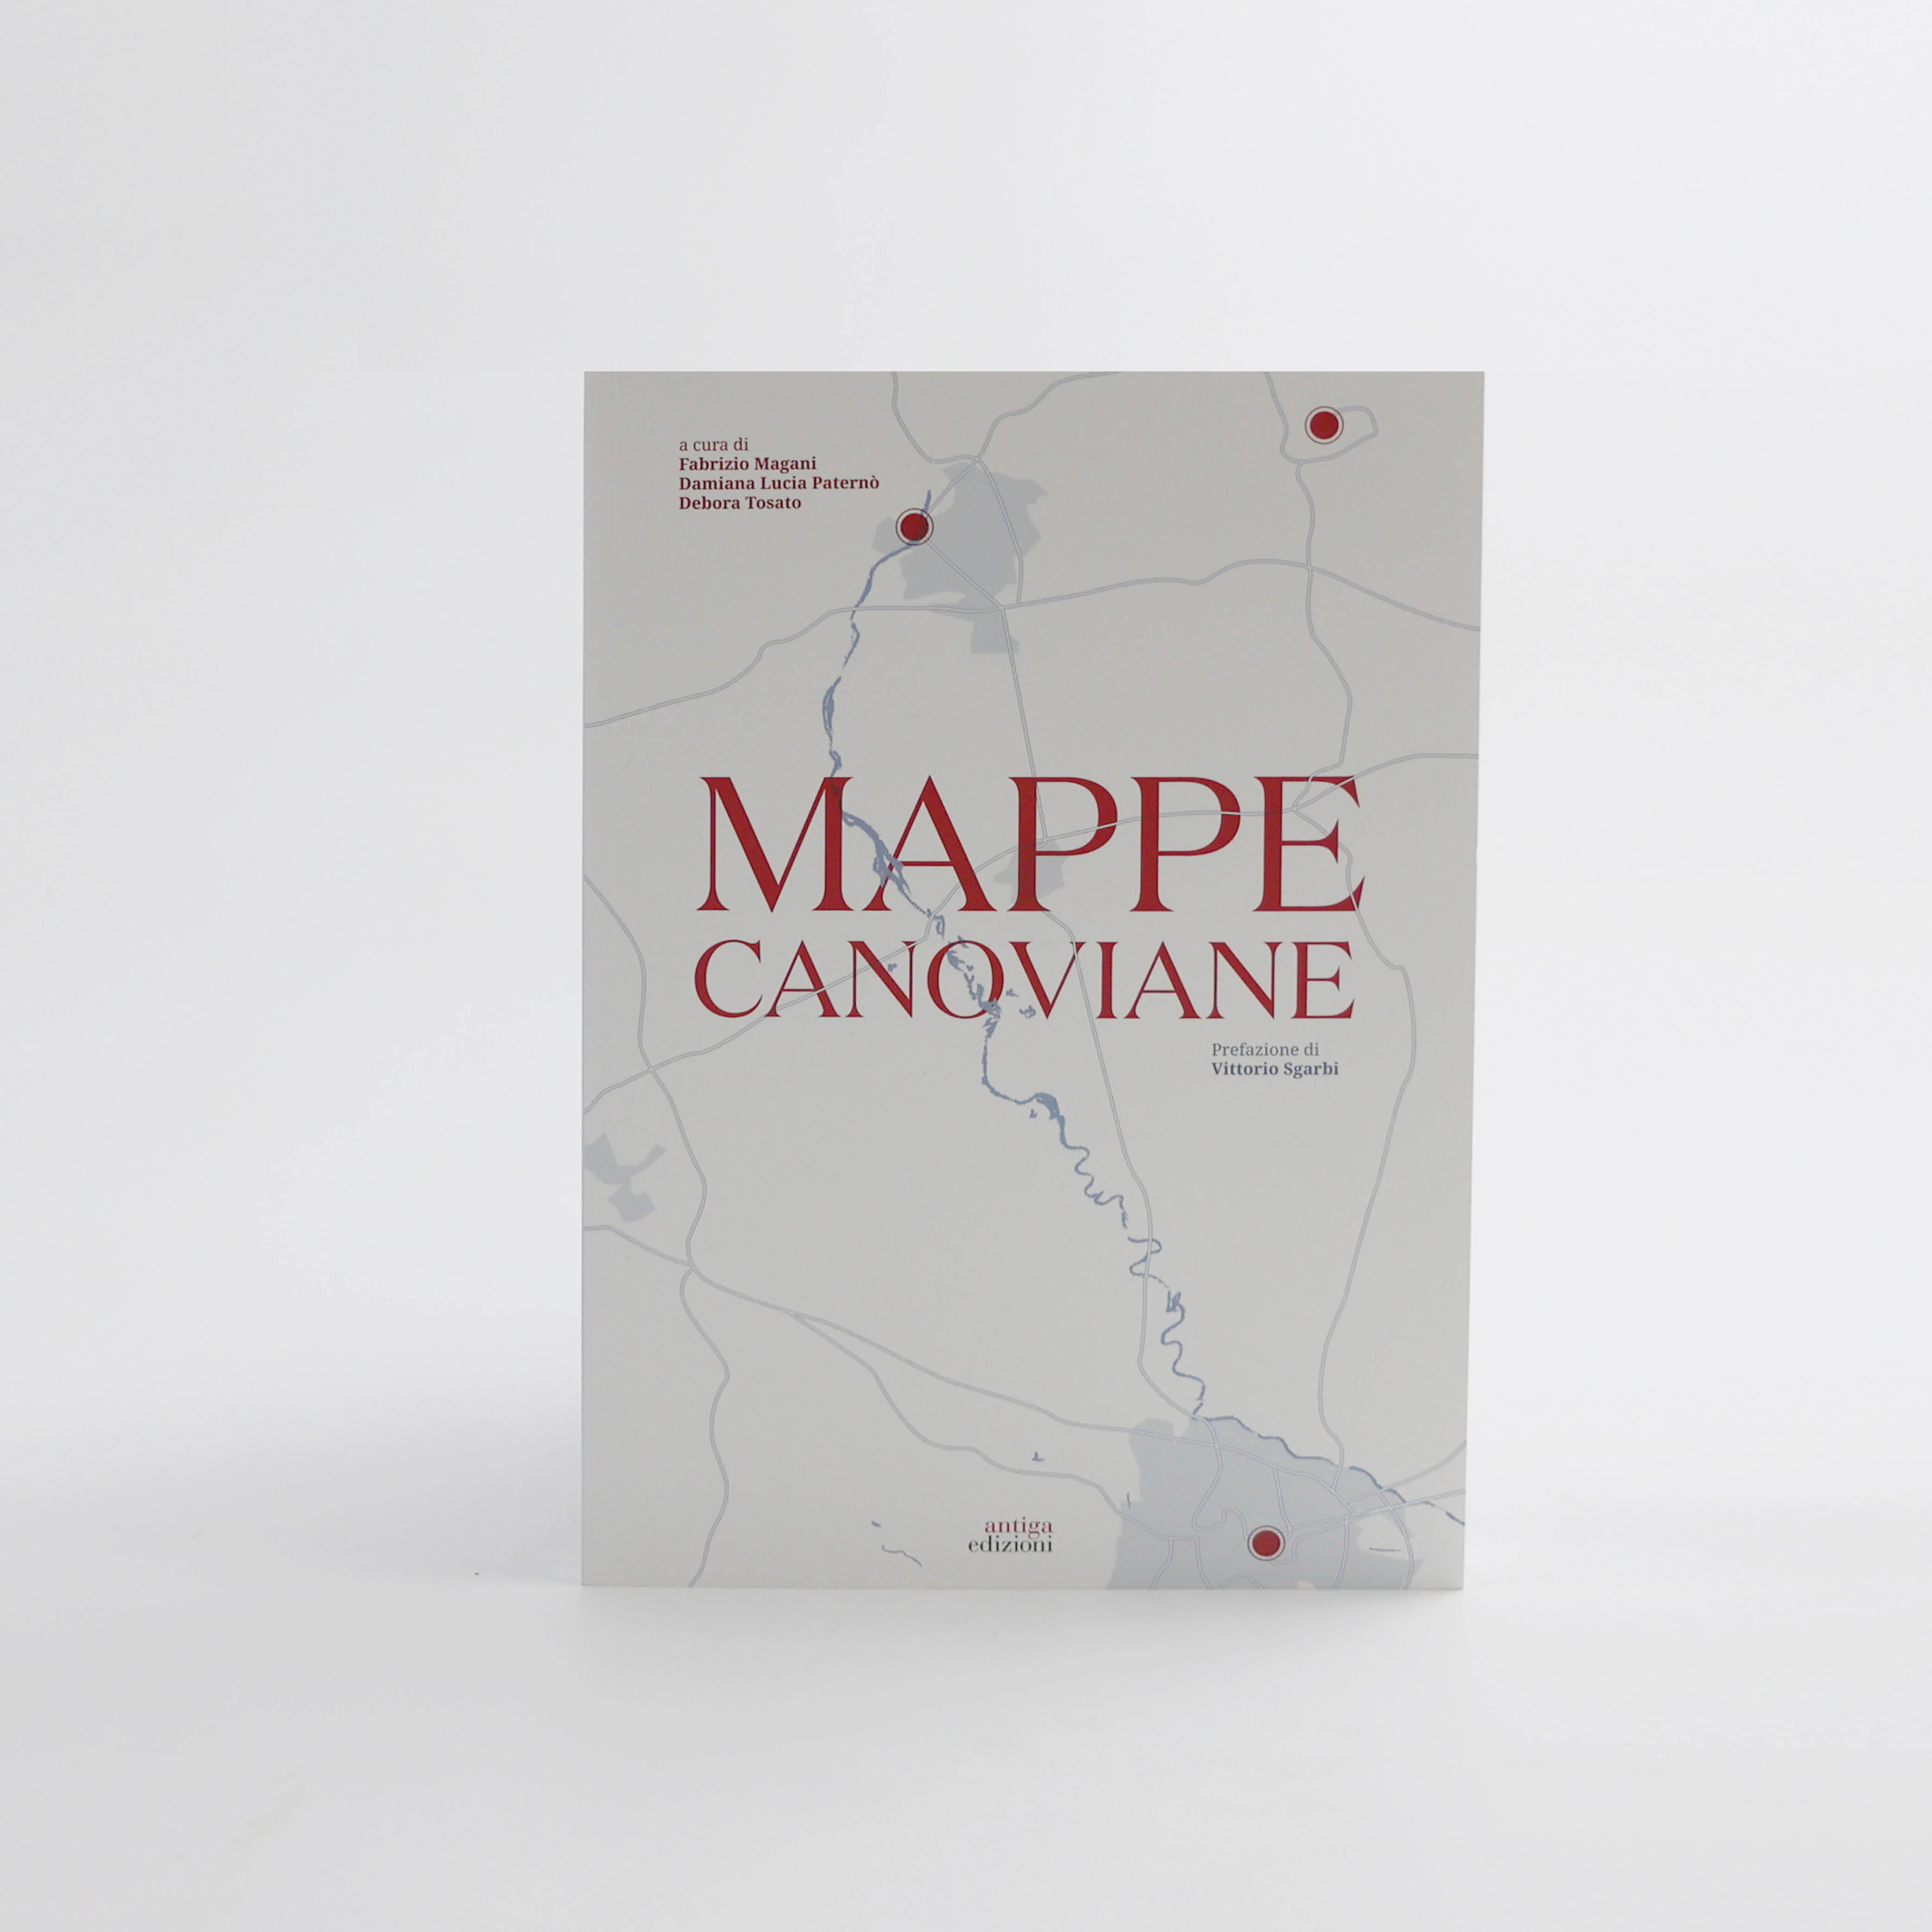 Mappe Canoviane